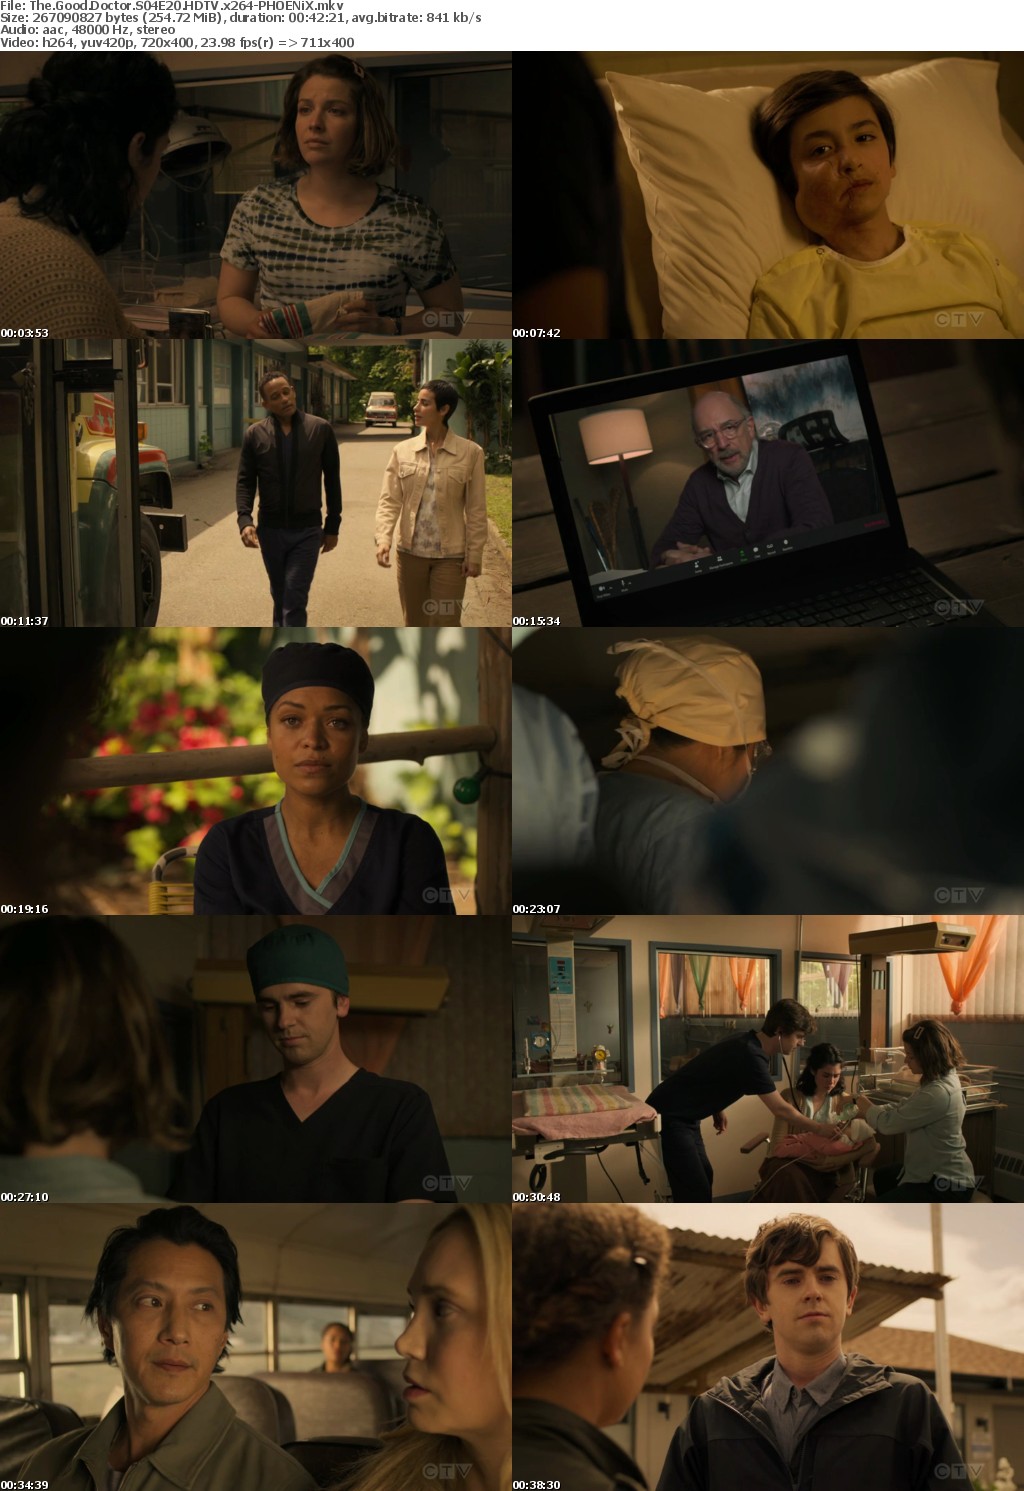 The Good Doctor S04E20 HDTV x264-PHOENiX